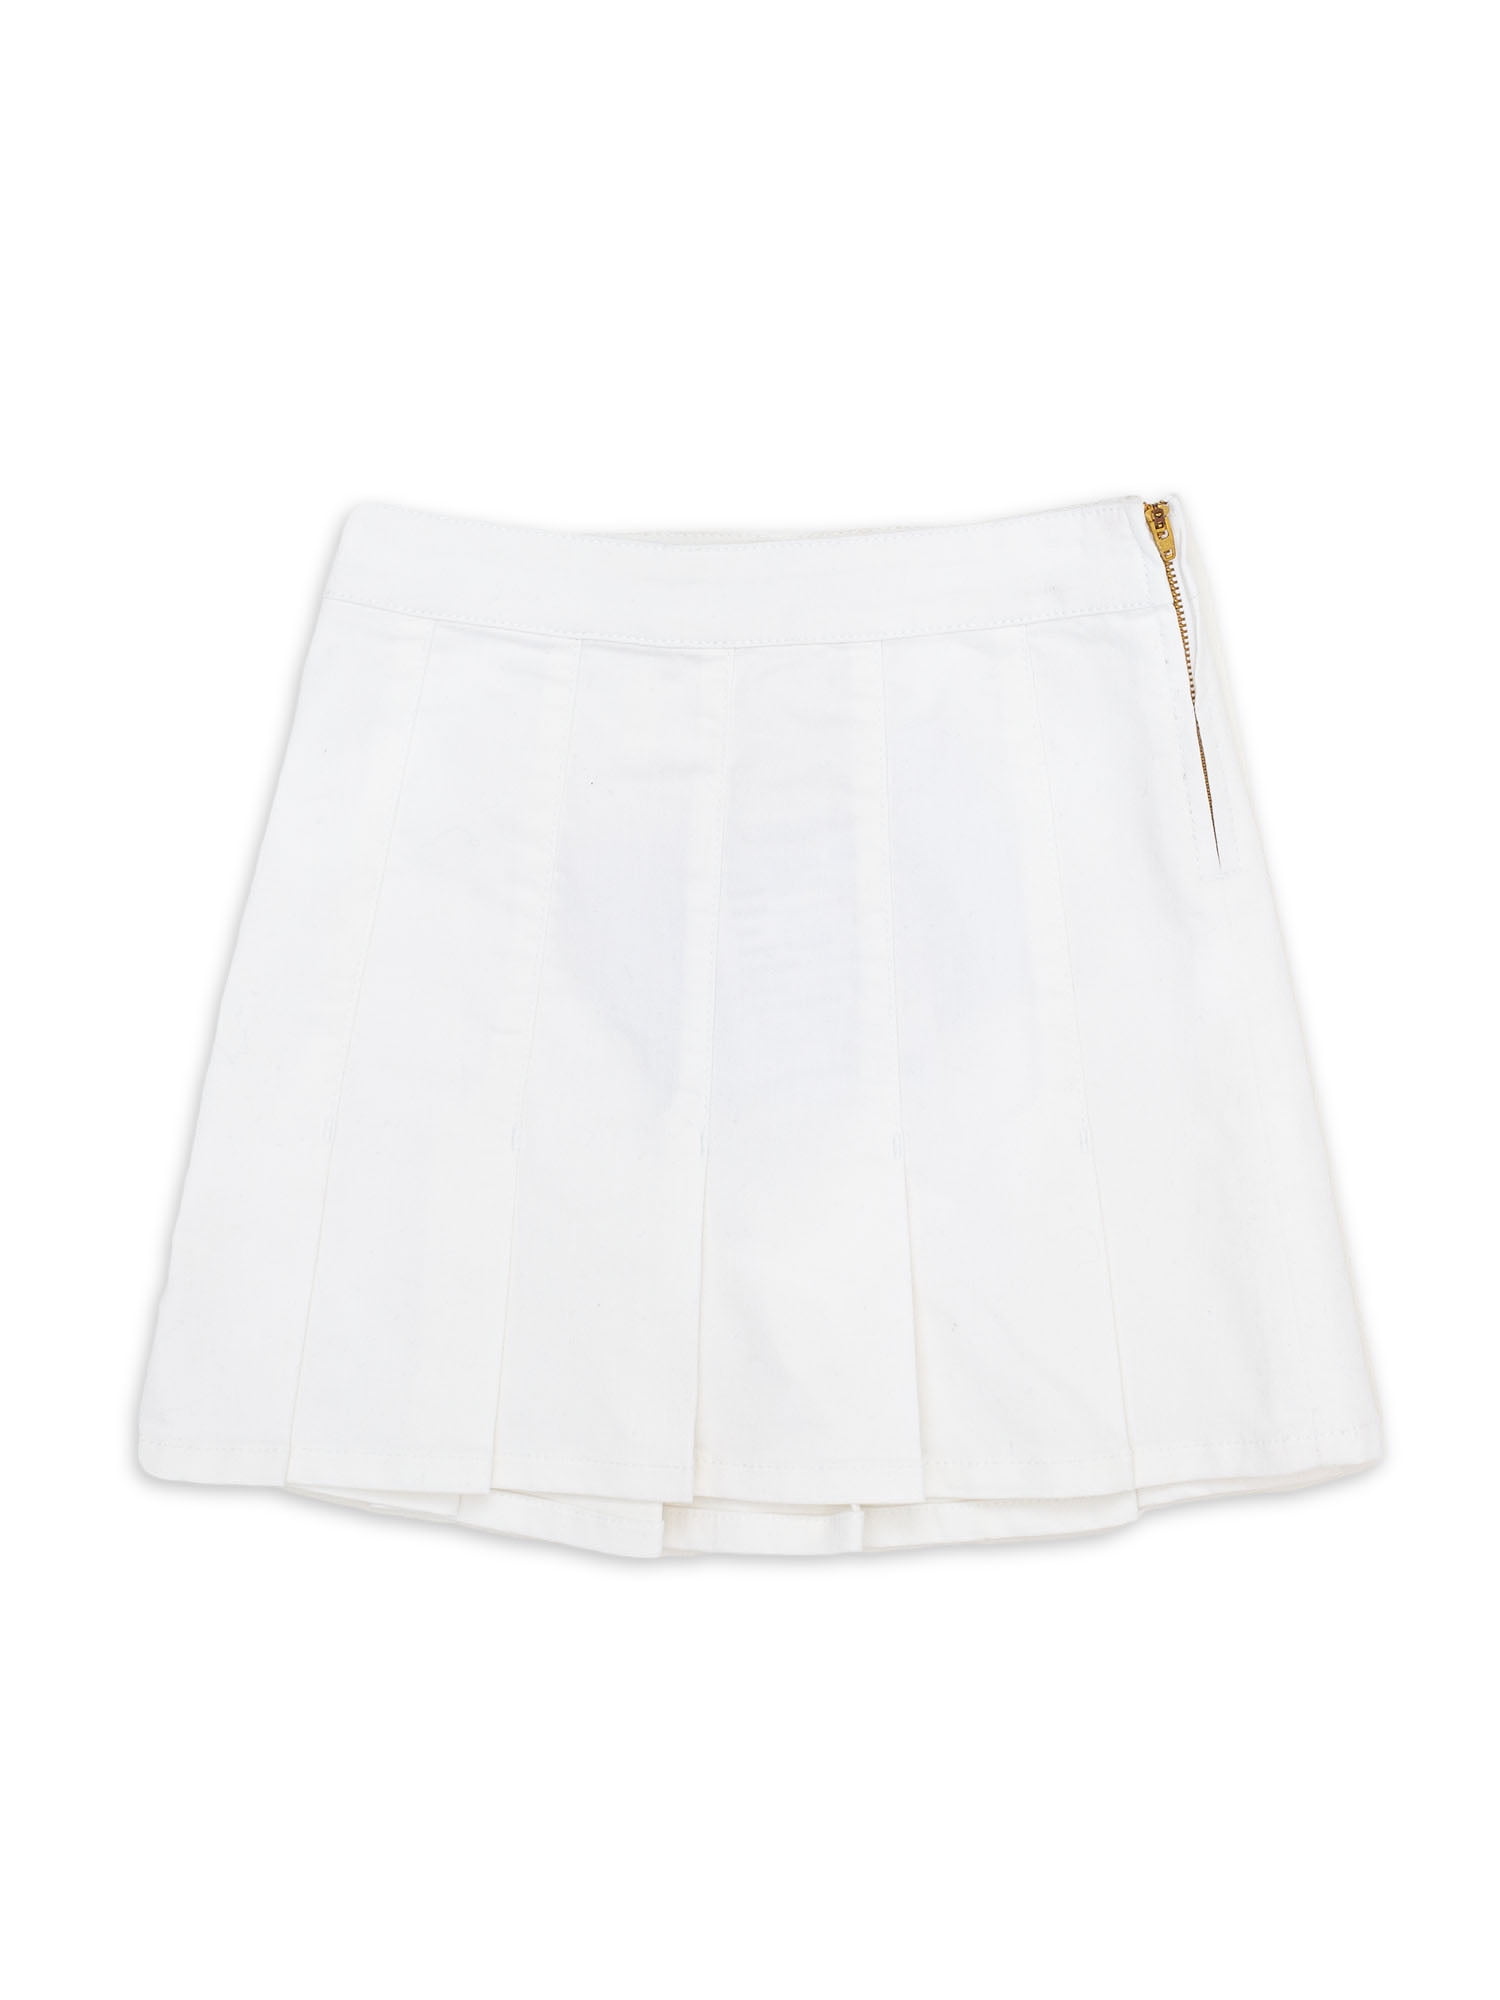 Wonder Nation Girls Cheerleader Skirt, Sizes 4-18 & Plus - Walmart.com